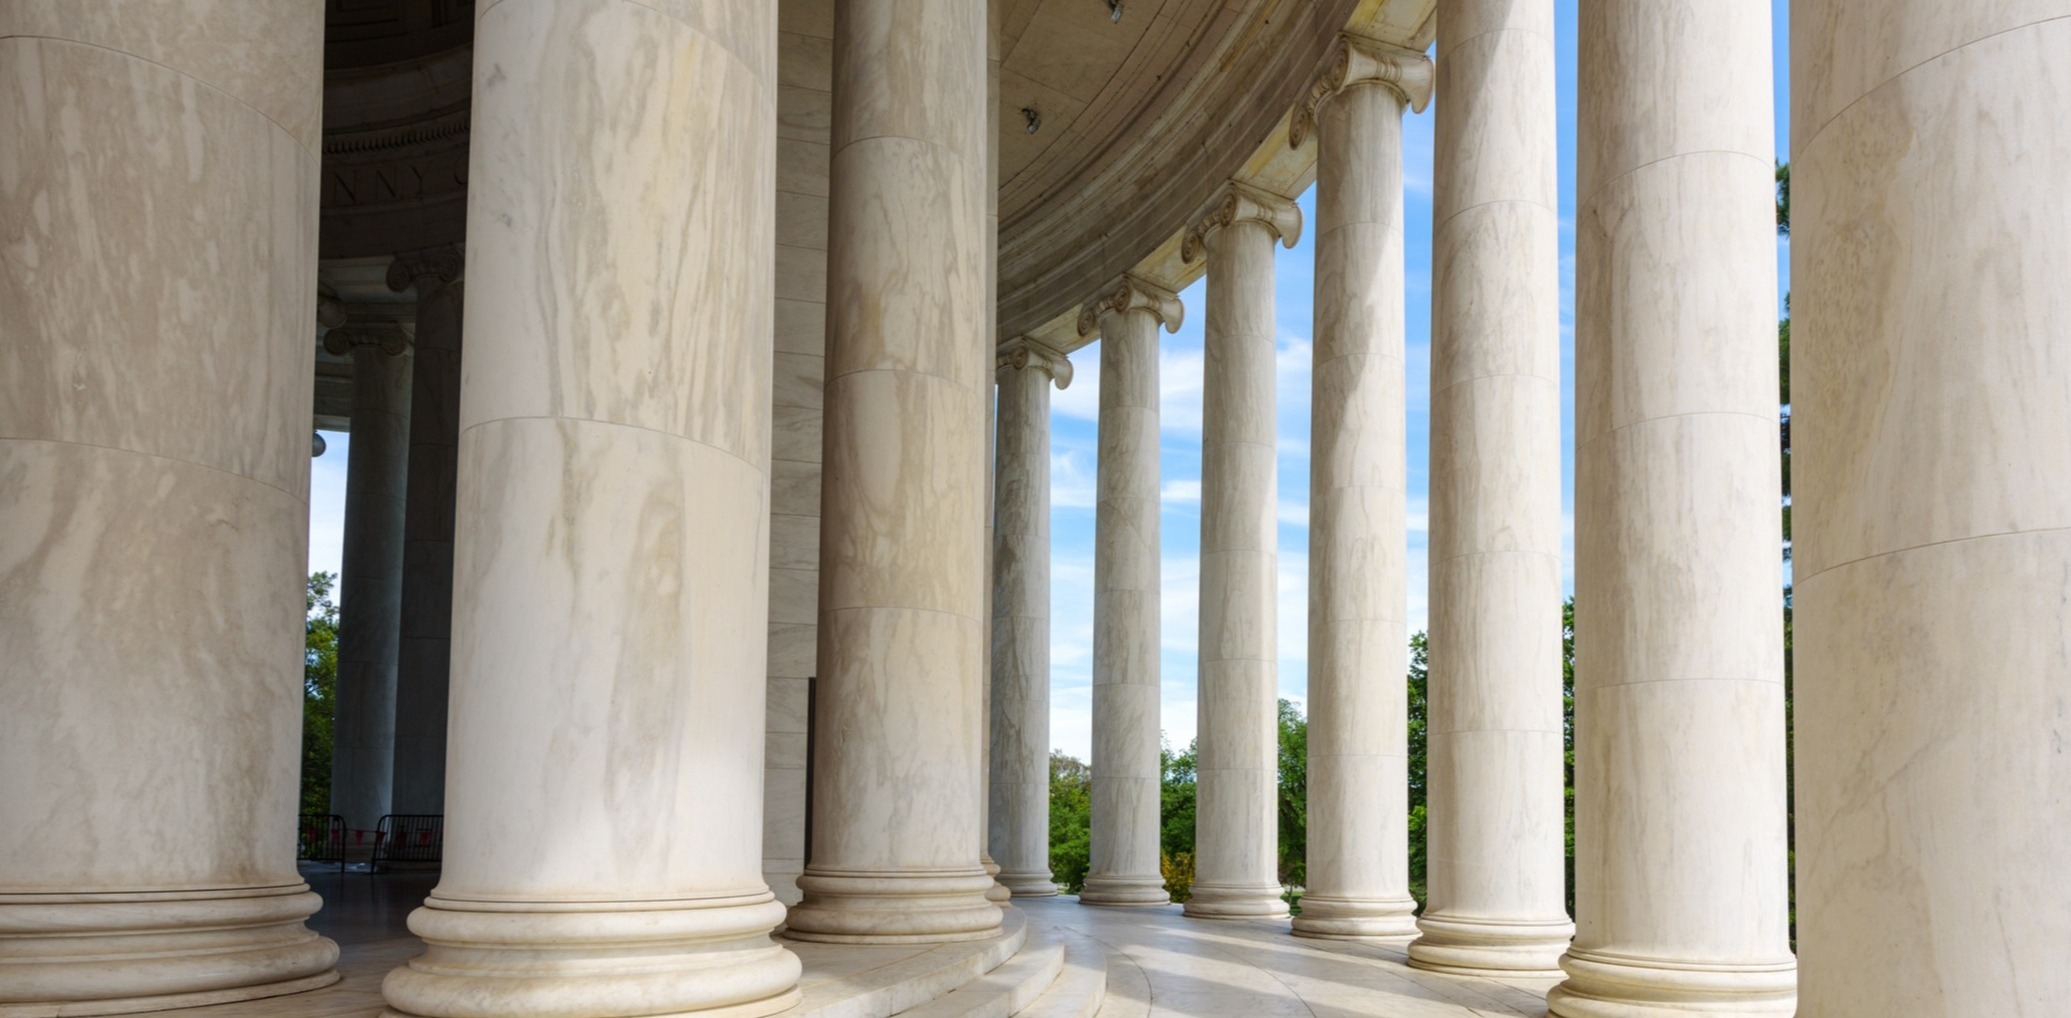 Ionic Columns at Jefferson Memorial, Washington DC Architecture